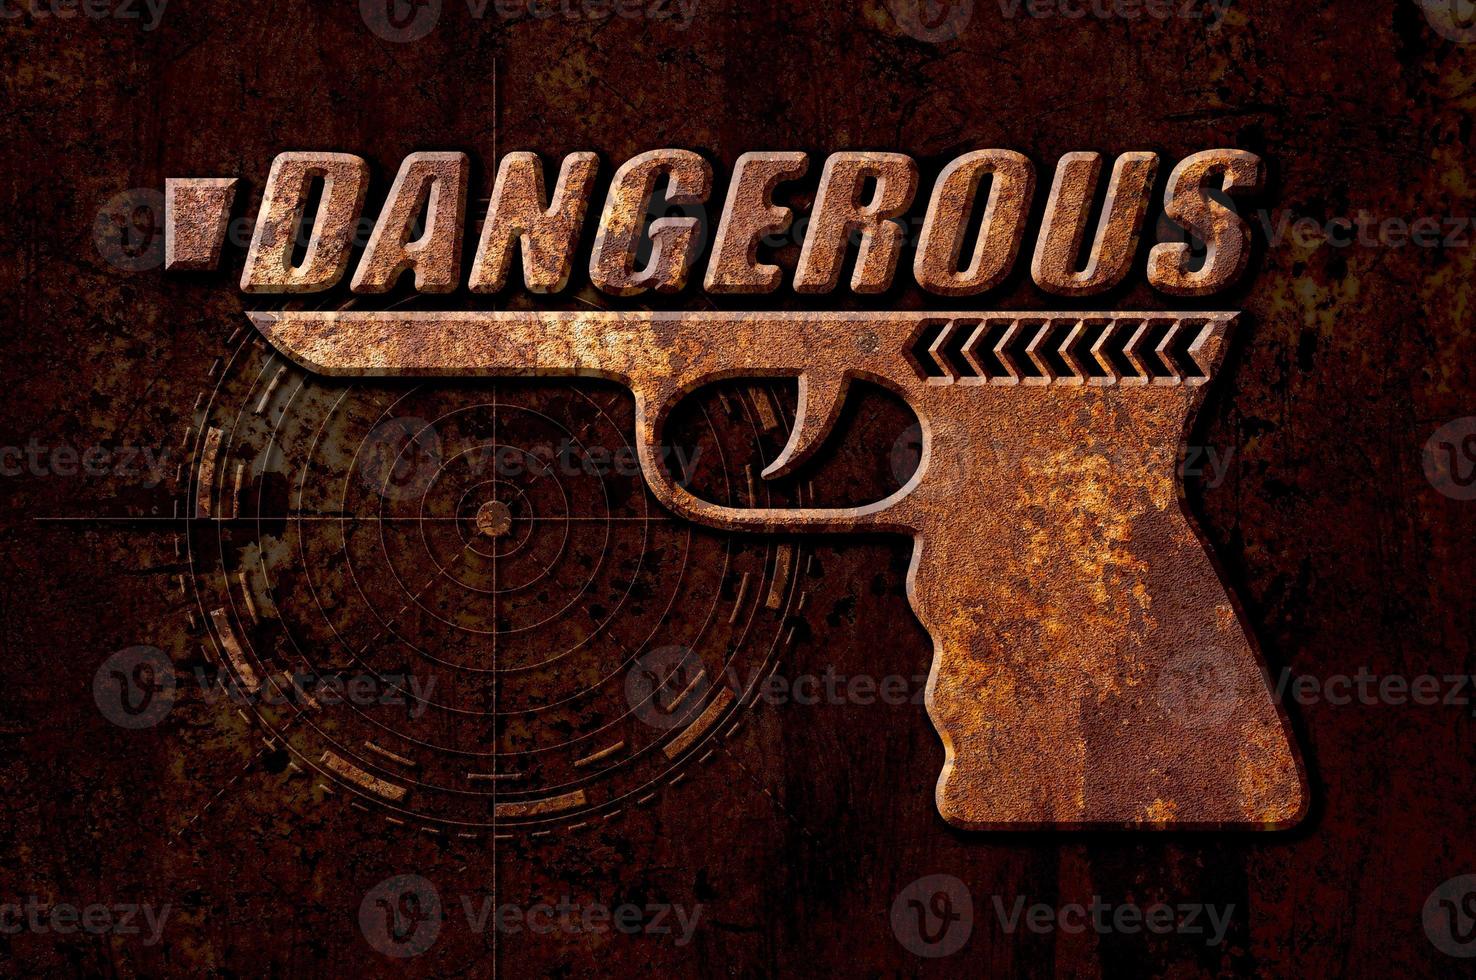 Dangerous gun concept on metal rust background photo